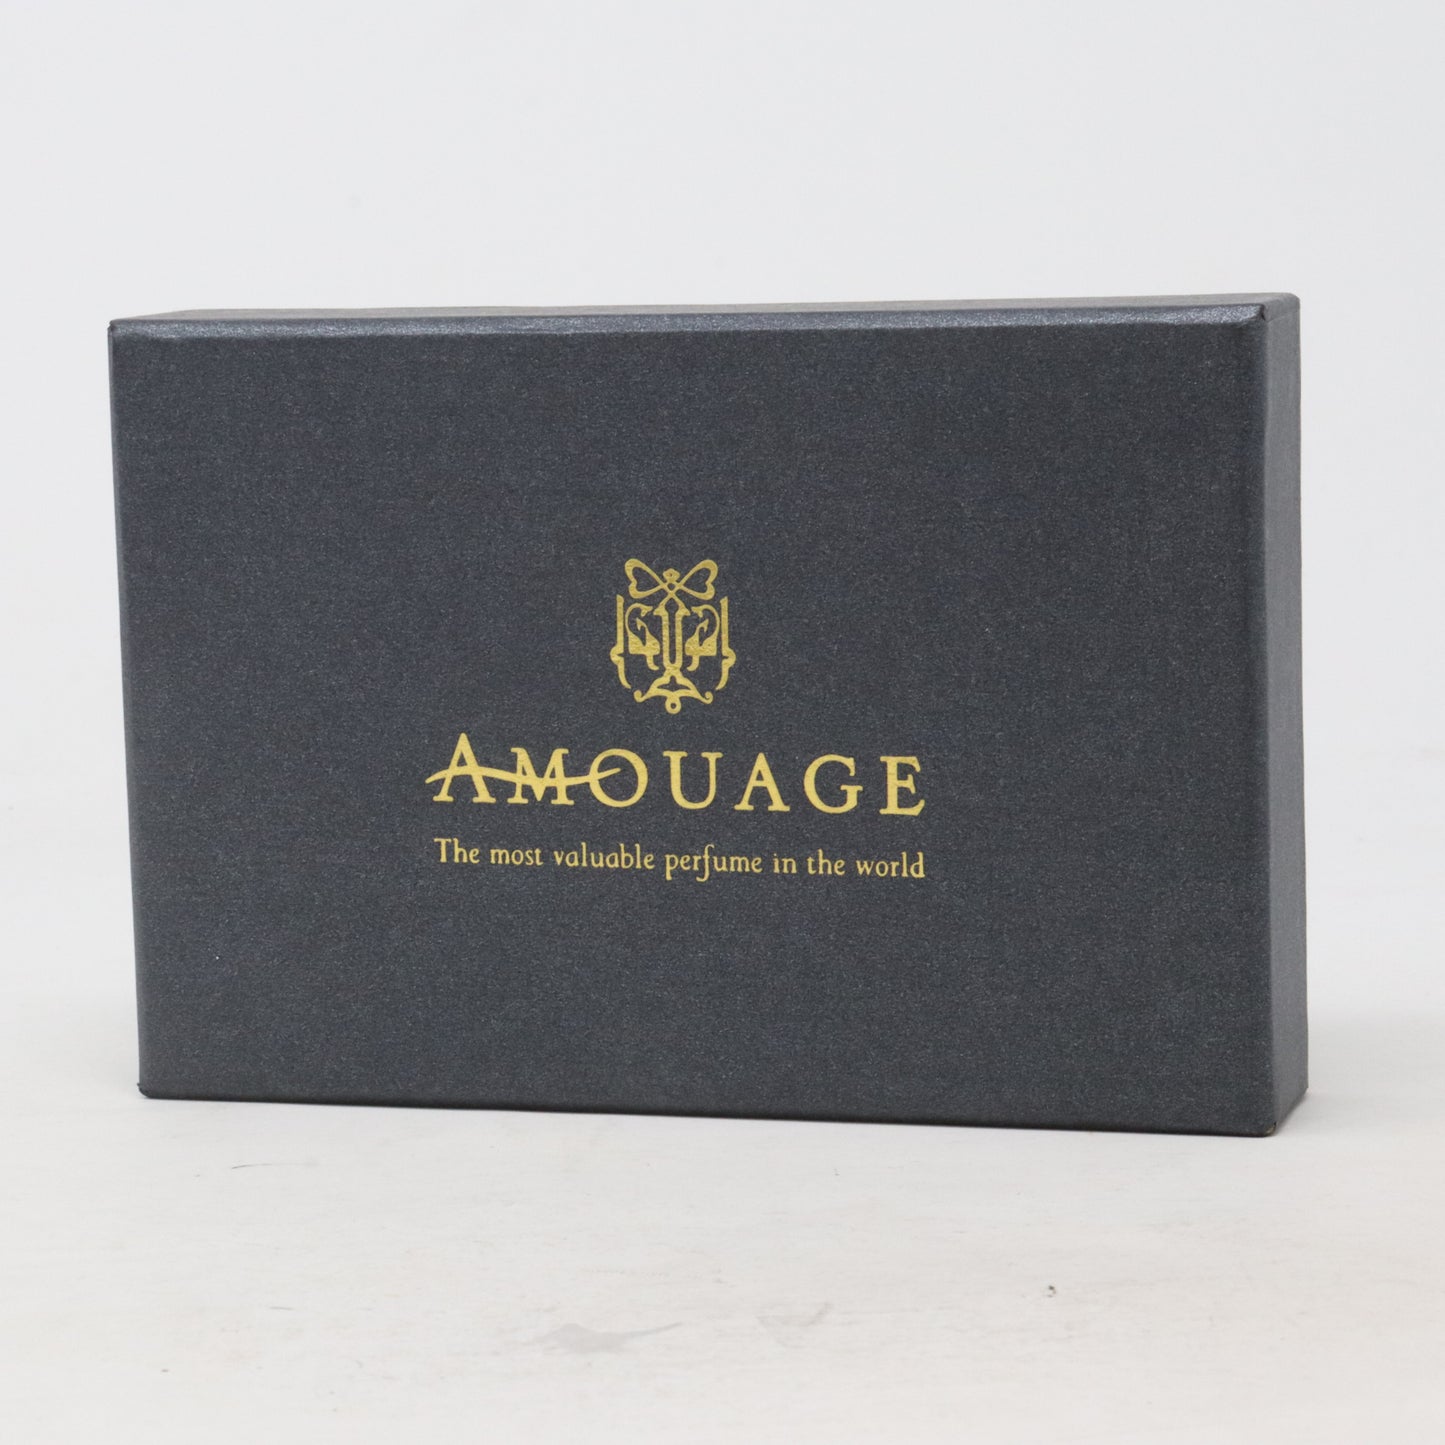 Amouage Travel Size Men's Perfume Set (Black)  / New With Box